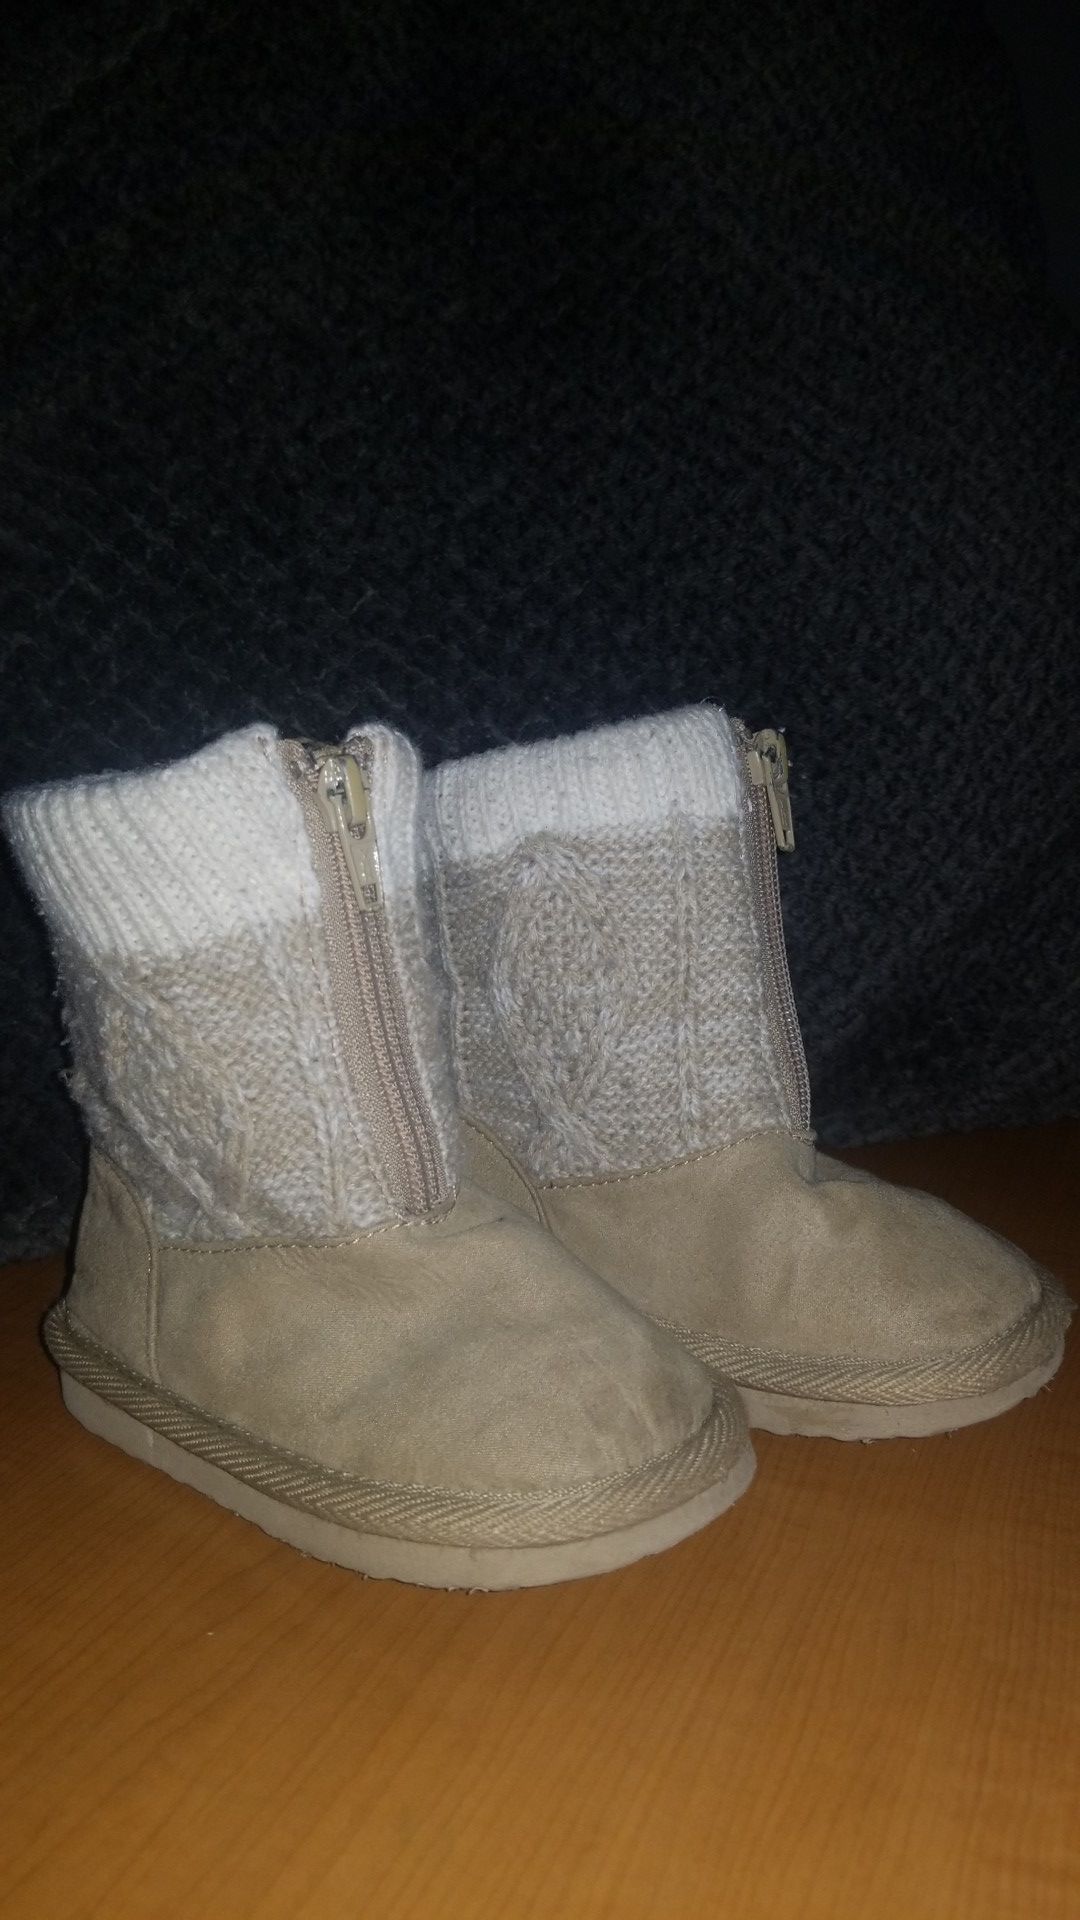 Size 5 childrens girls winter boots